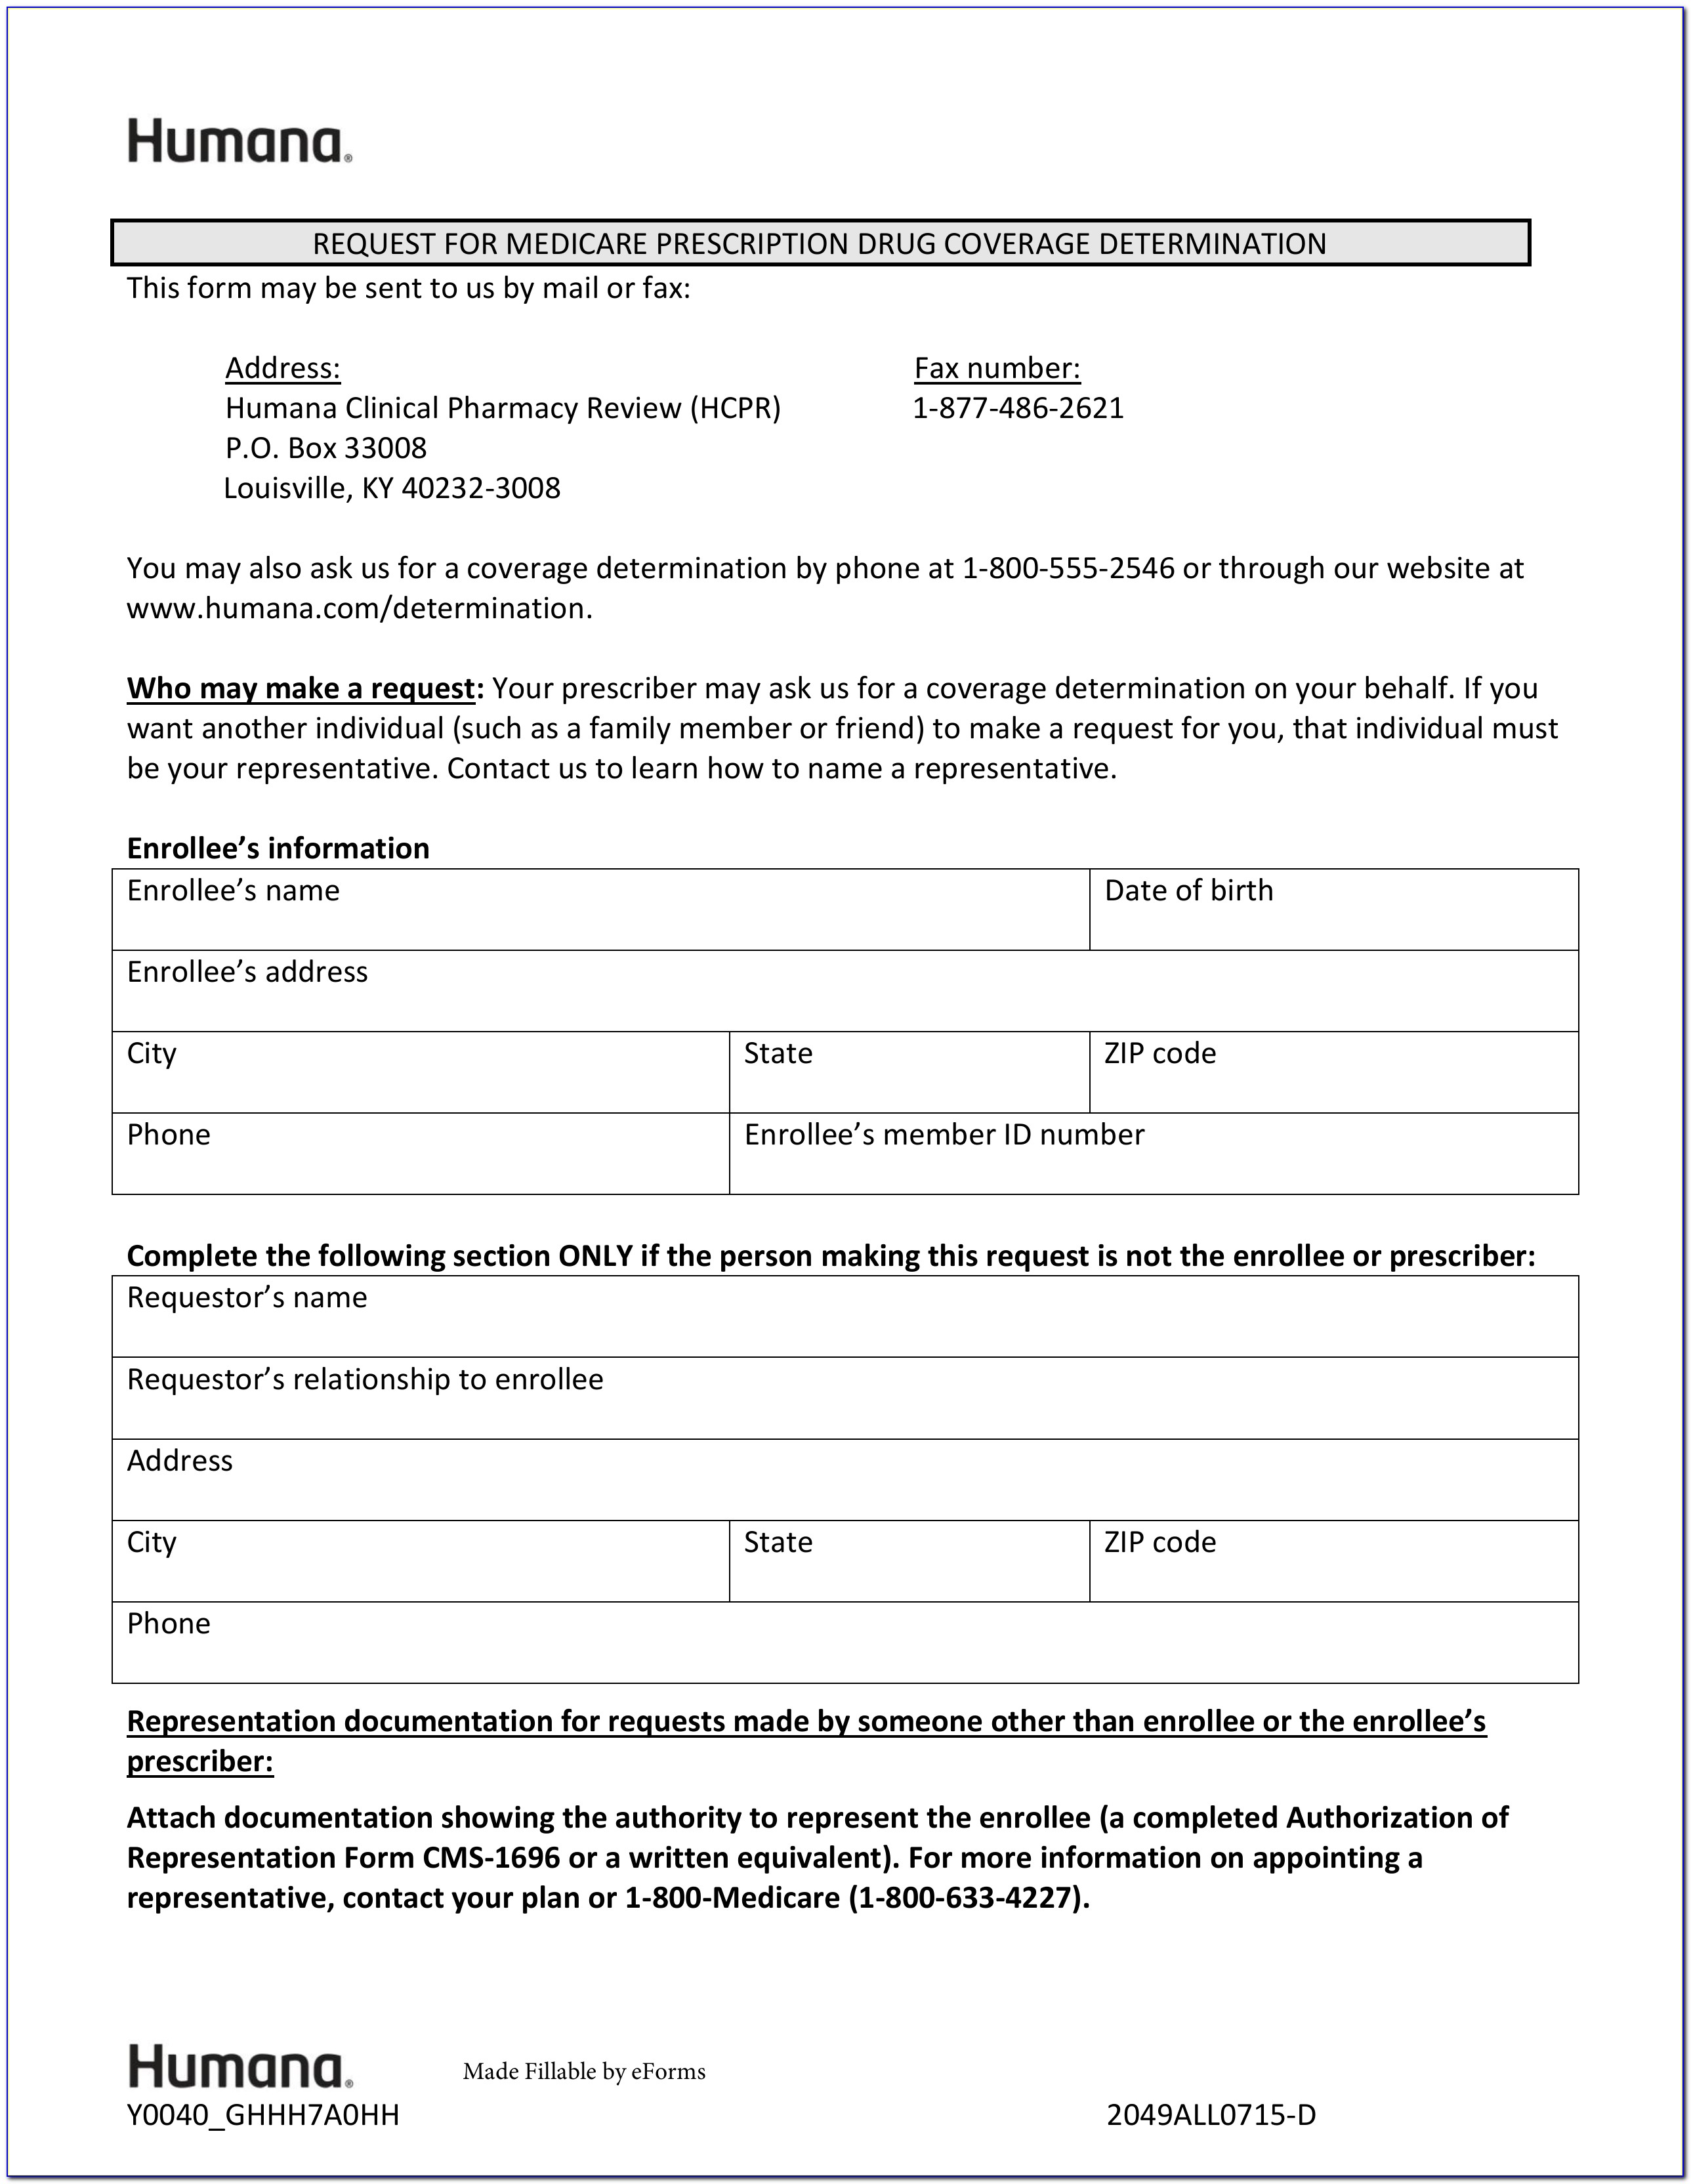 Humana Medicare Part D Prior Authorization Form